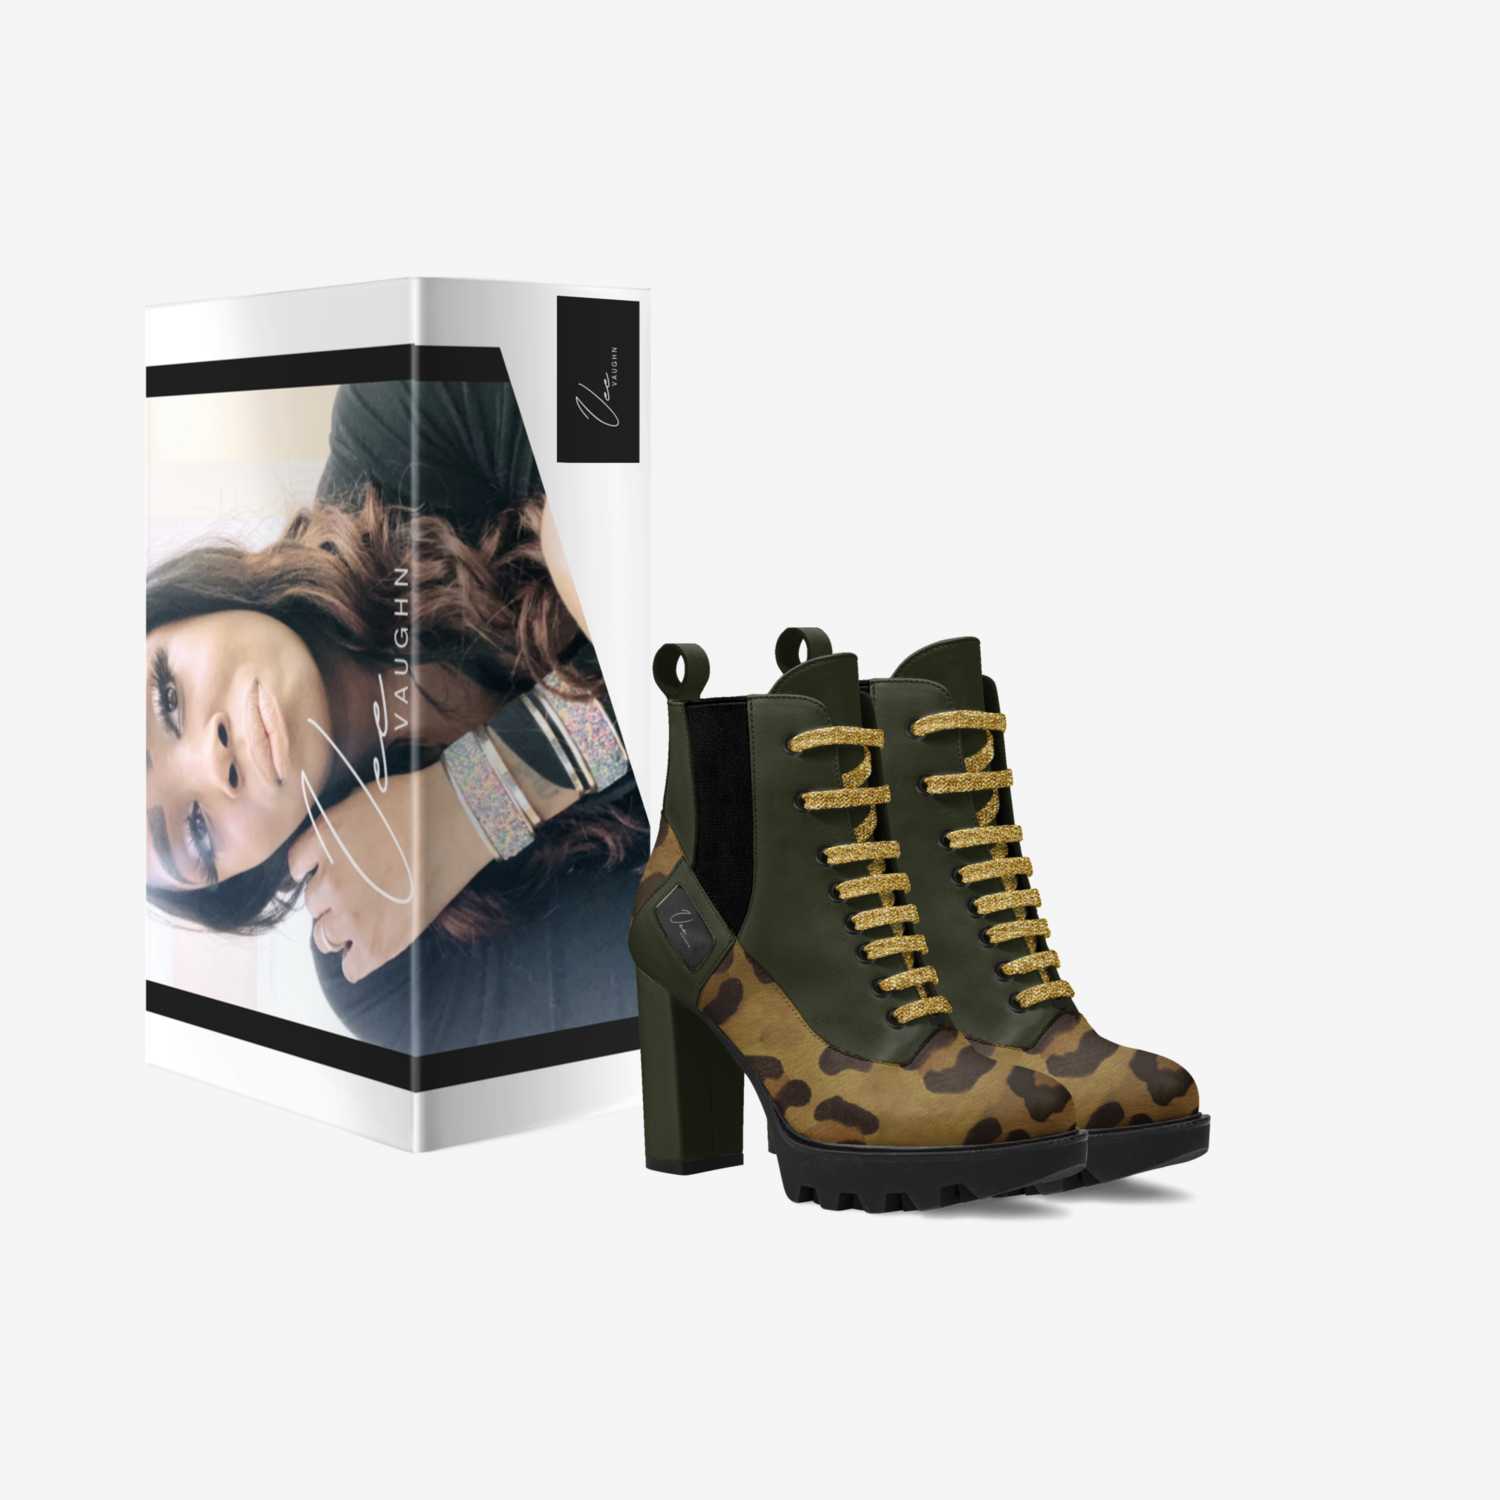 Vee Vaughn custom made in Italy shoes by Veorna Vaughn | Box view